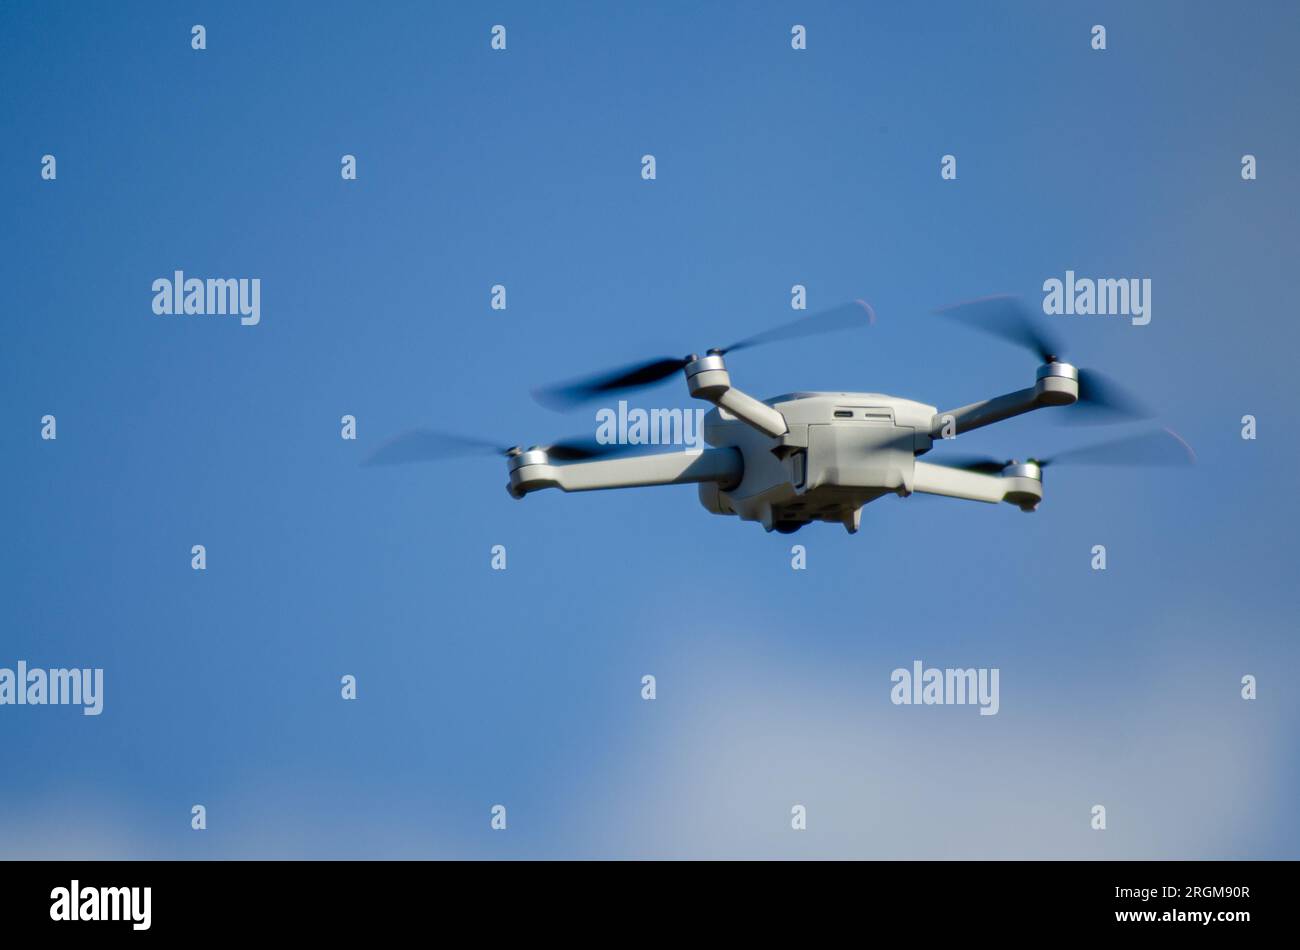 vigo, españa 07-31-2023 a DJI Mavic Mini 3 drone in flight, blue sky in the background. Stock Photo